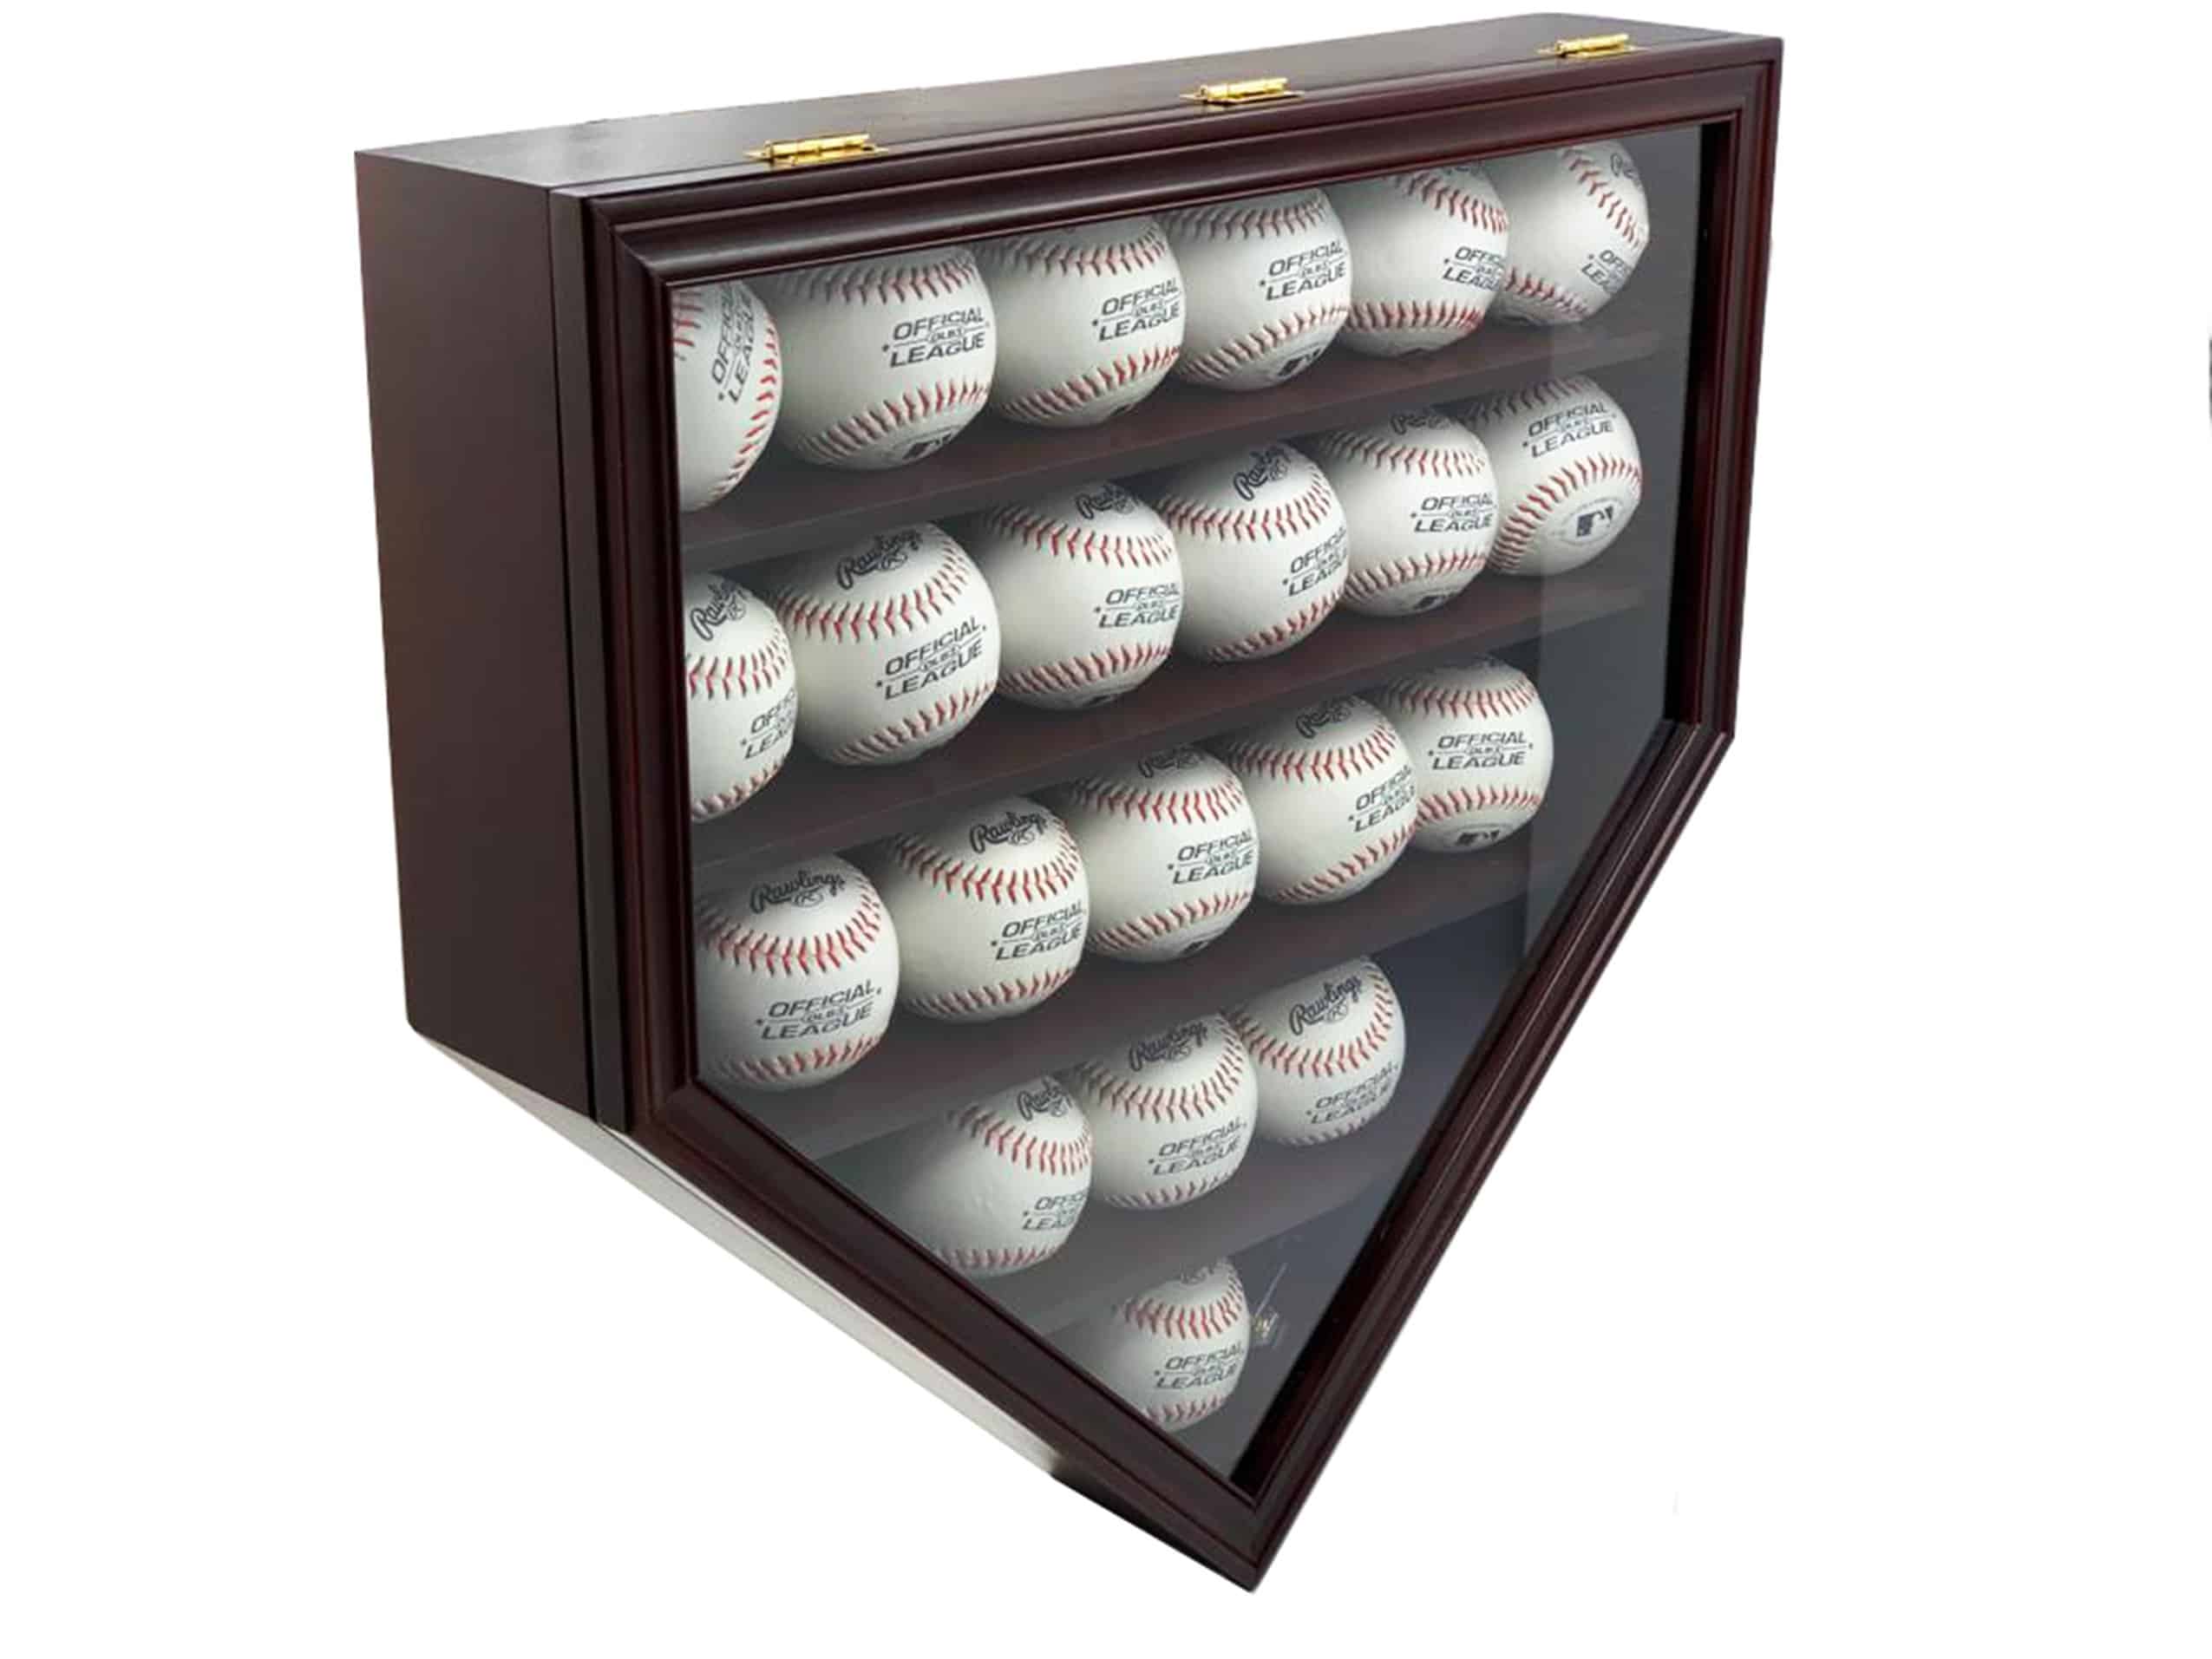  21 Baseball Display Case (Solid Wood)  Wall Cabinet Holder 3